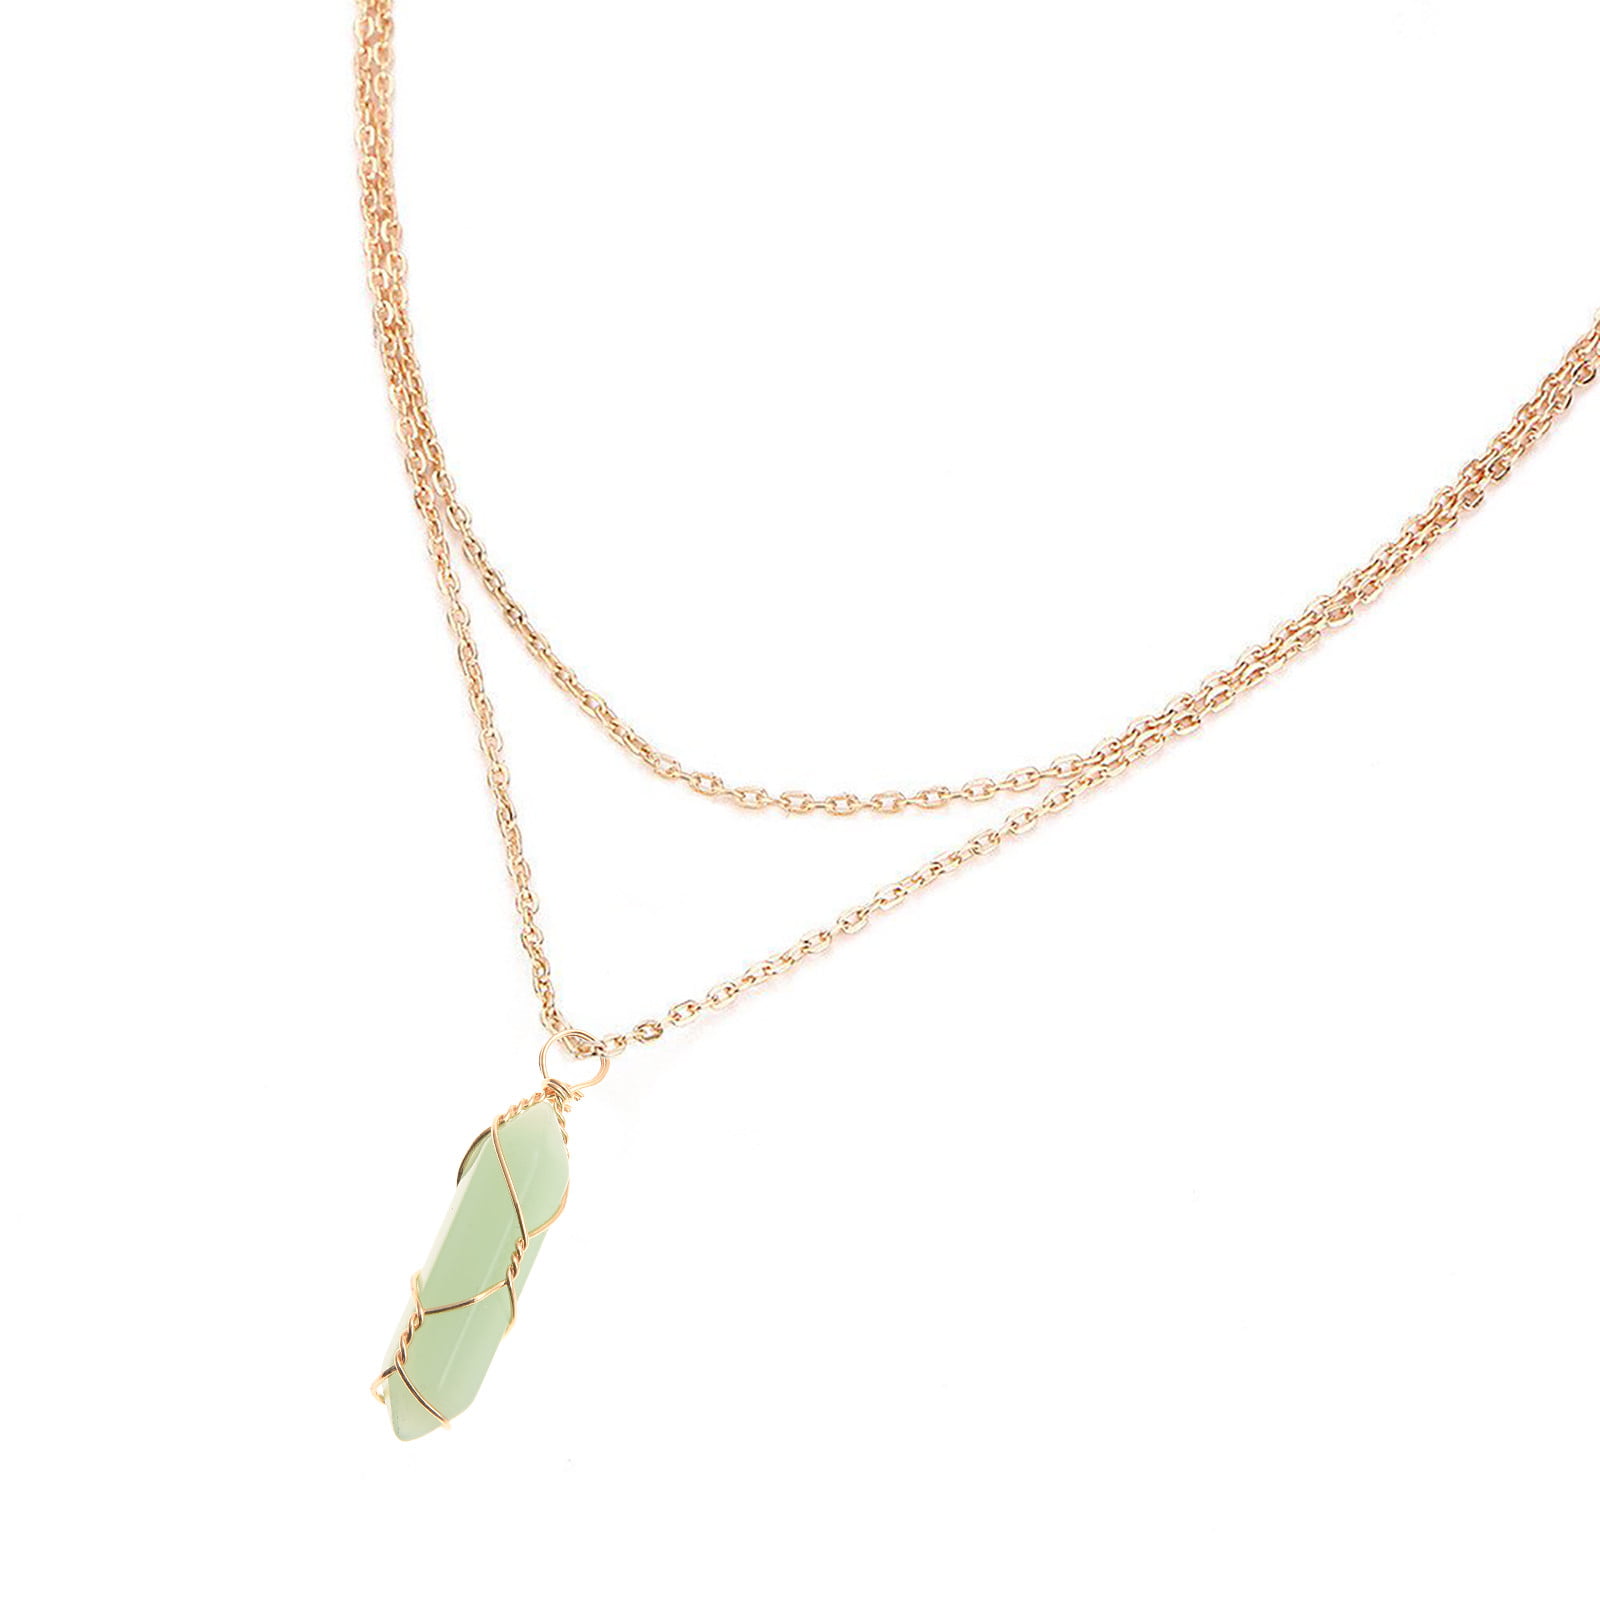 Details about   Natural green aventurine Quartz Crystal Necklace Pendant healing 3pc 